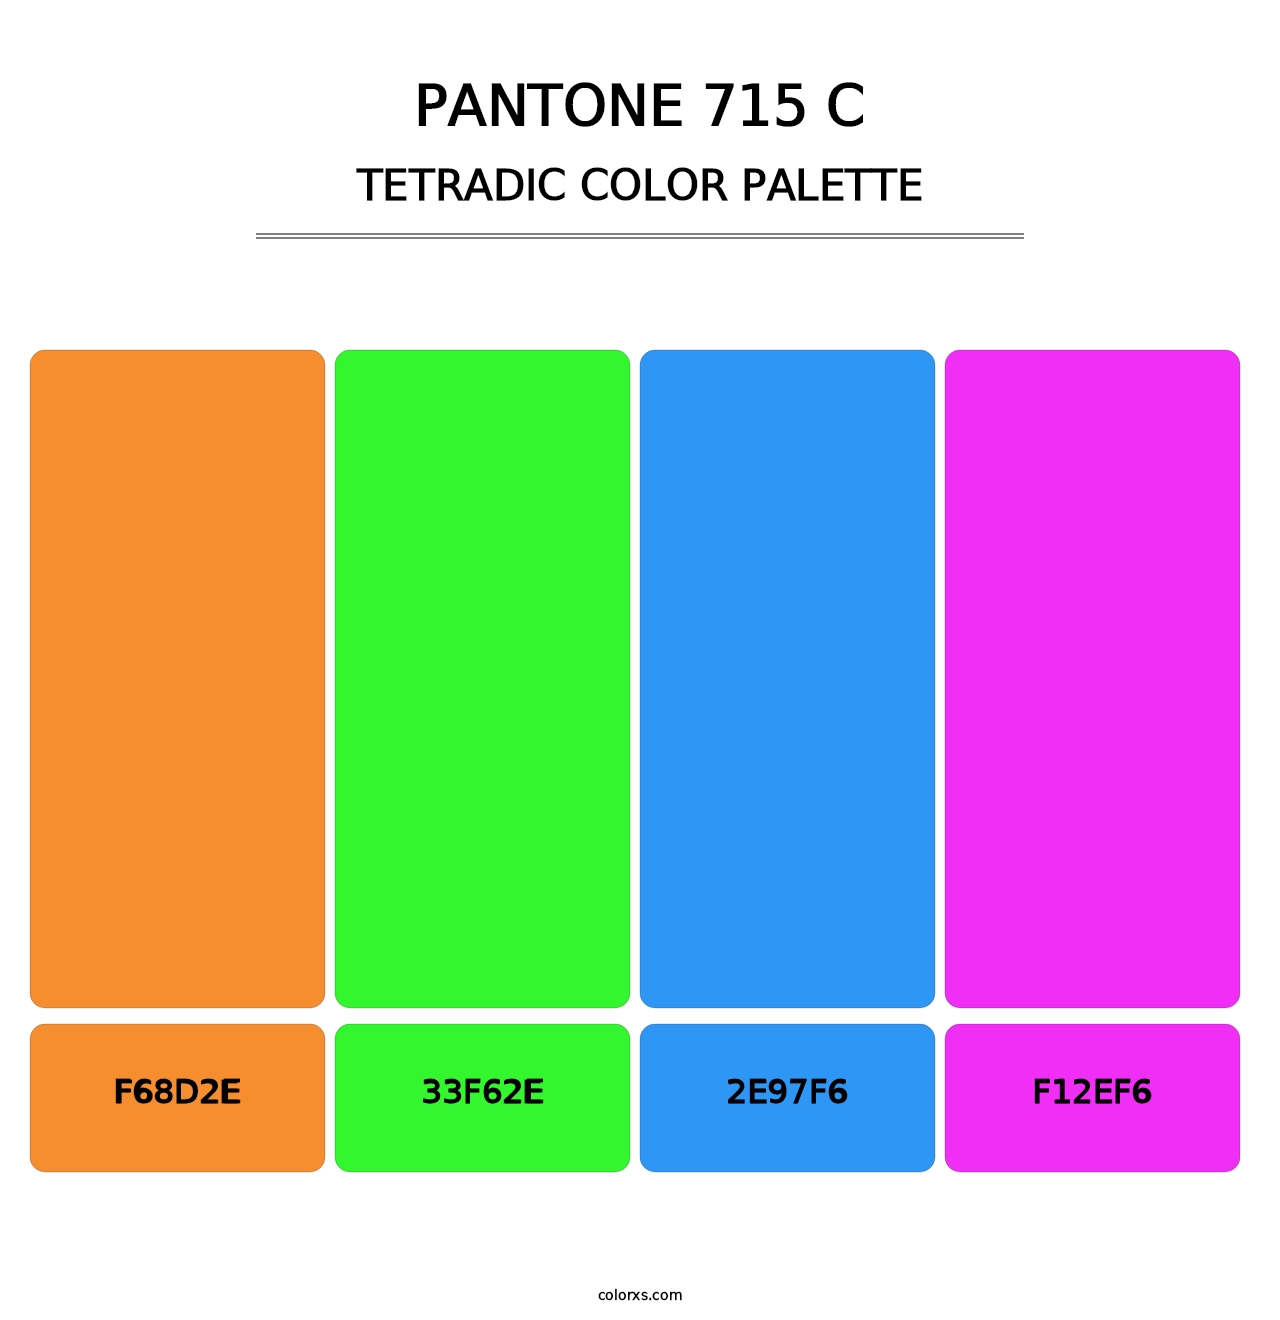 PANTONE 715 C - Tetradic Color Palette